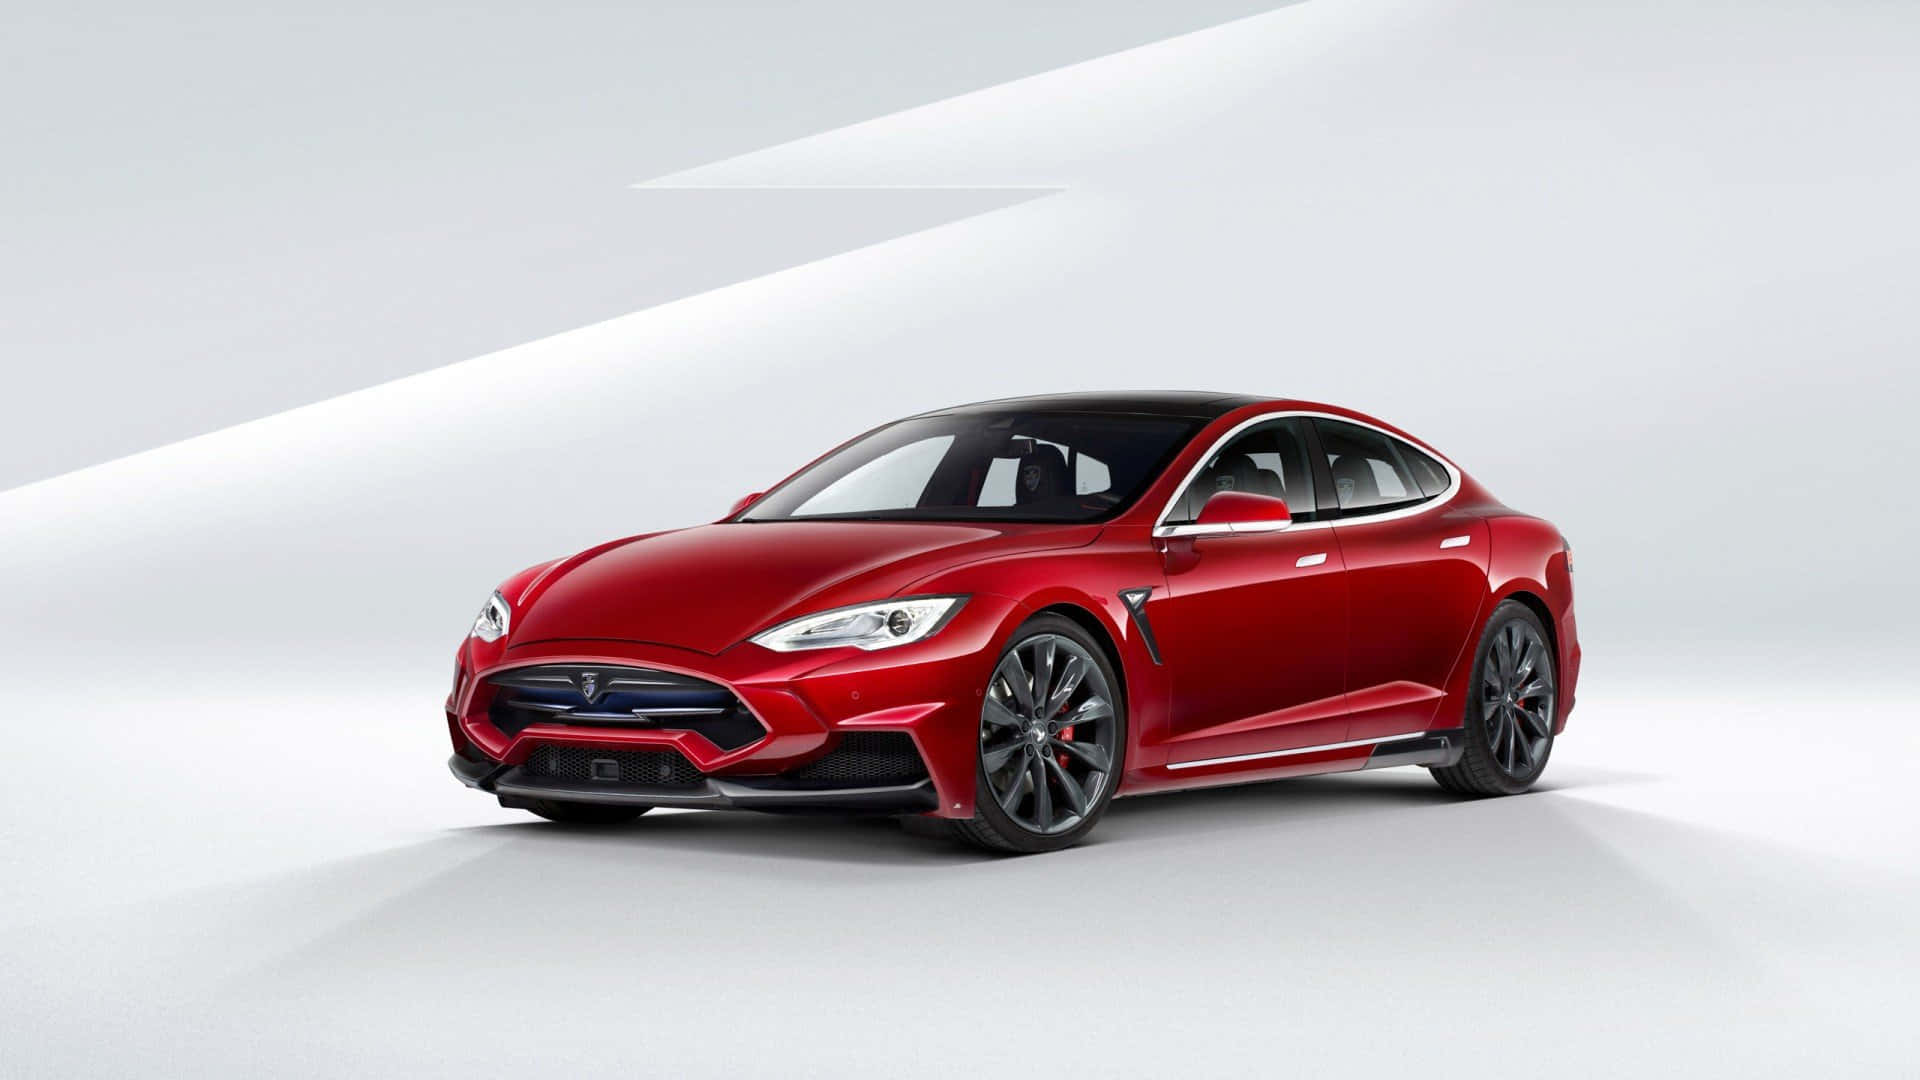 Teslamodel S - En Rød Bil På En Hvid Baggrund